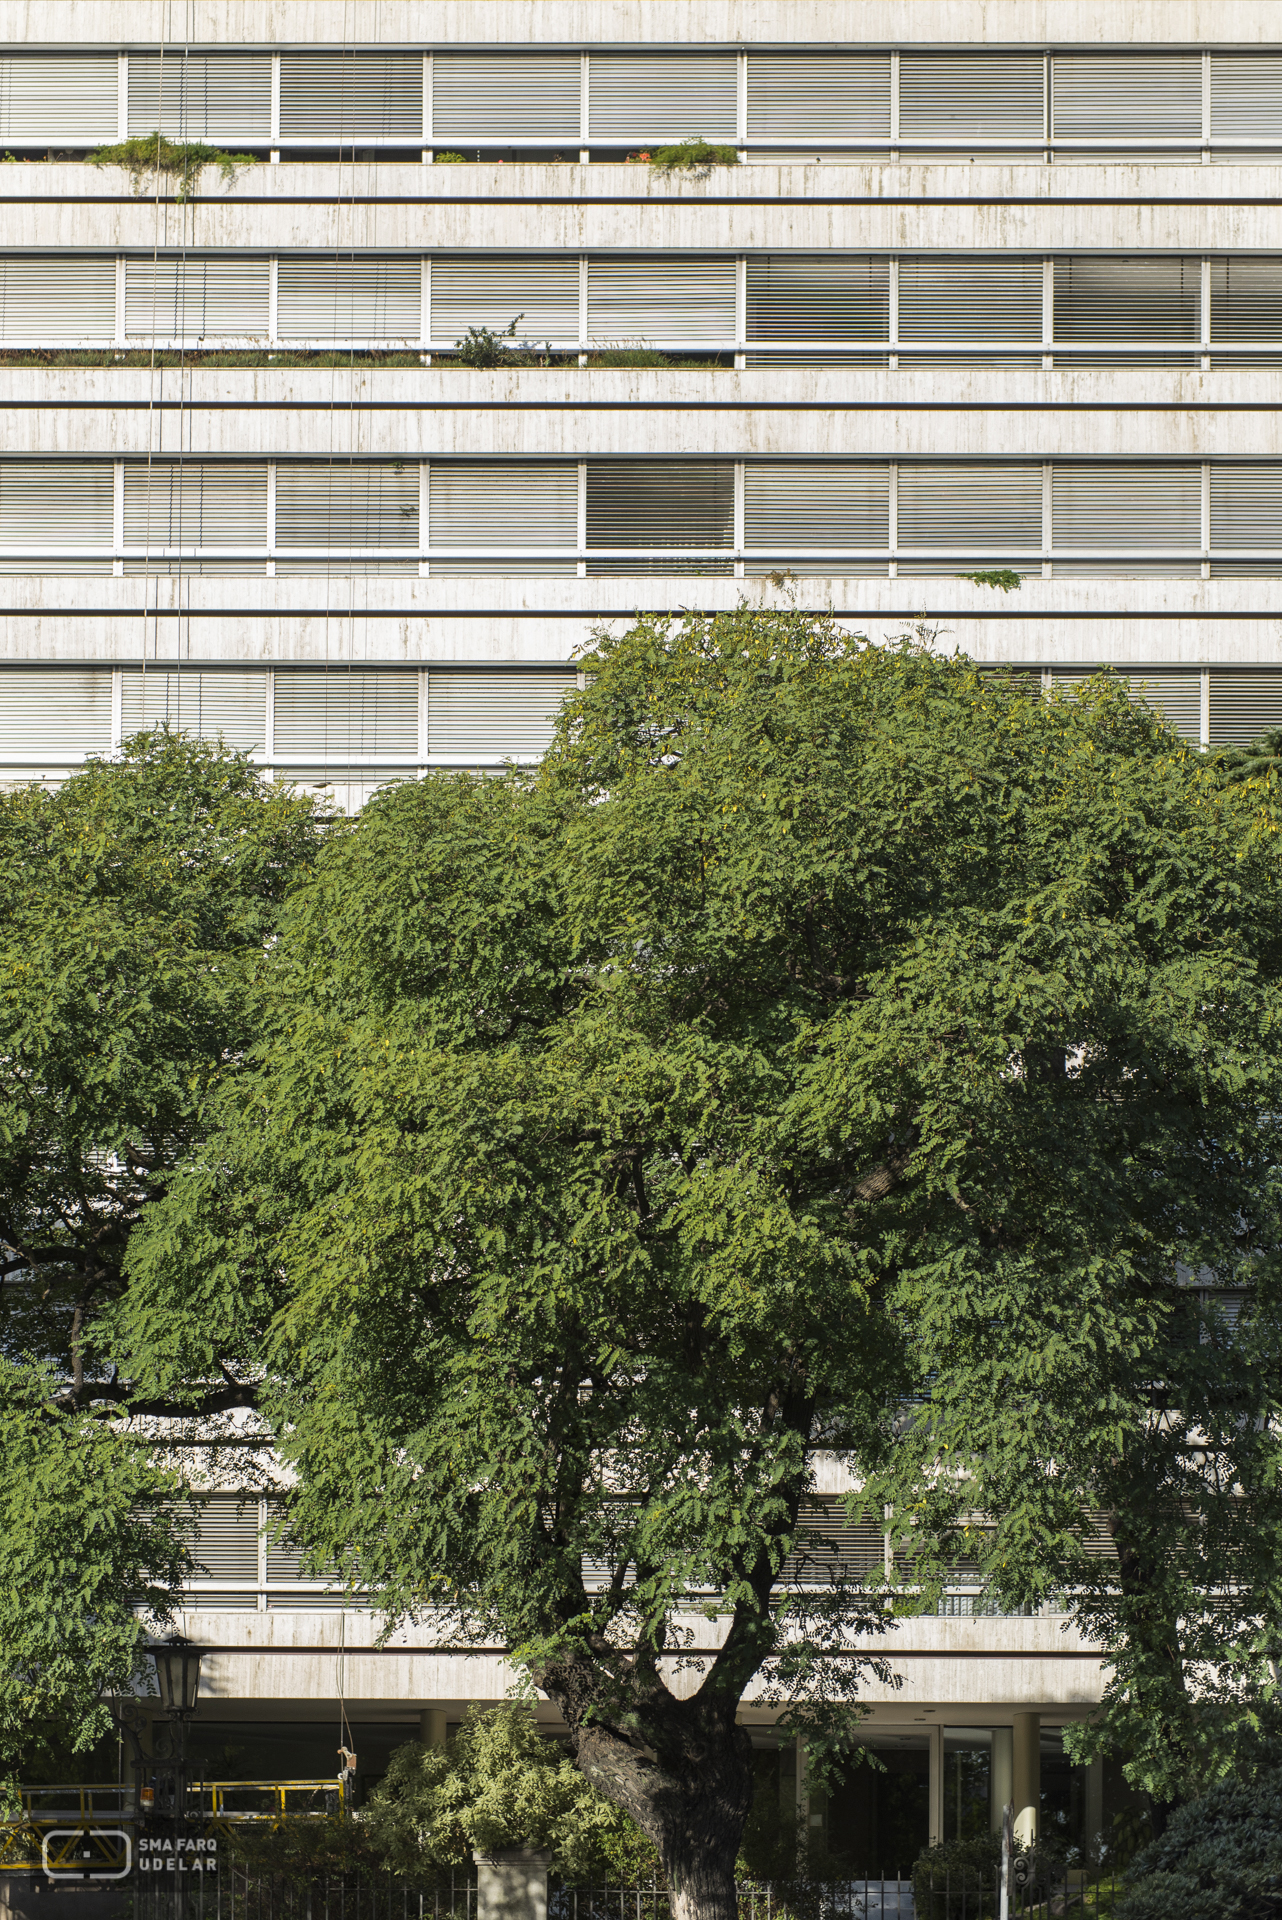 Edificio Champs Elysées, Arq. R. Sichero, 1983, Montevideo. Foto: Nacho Correa 2015